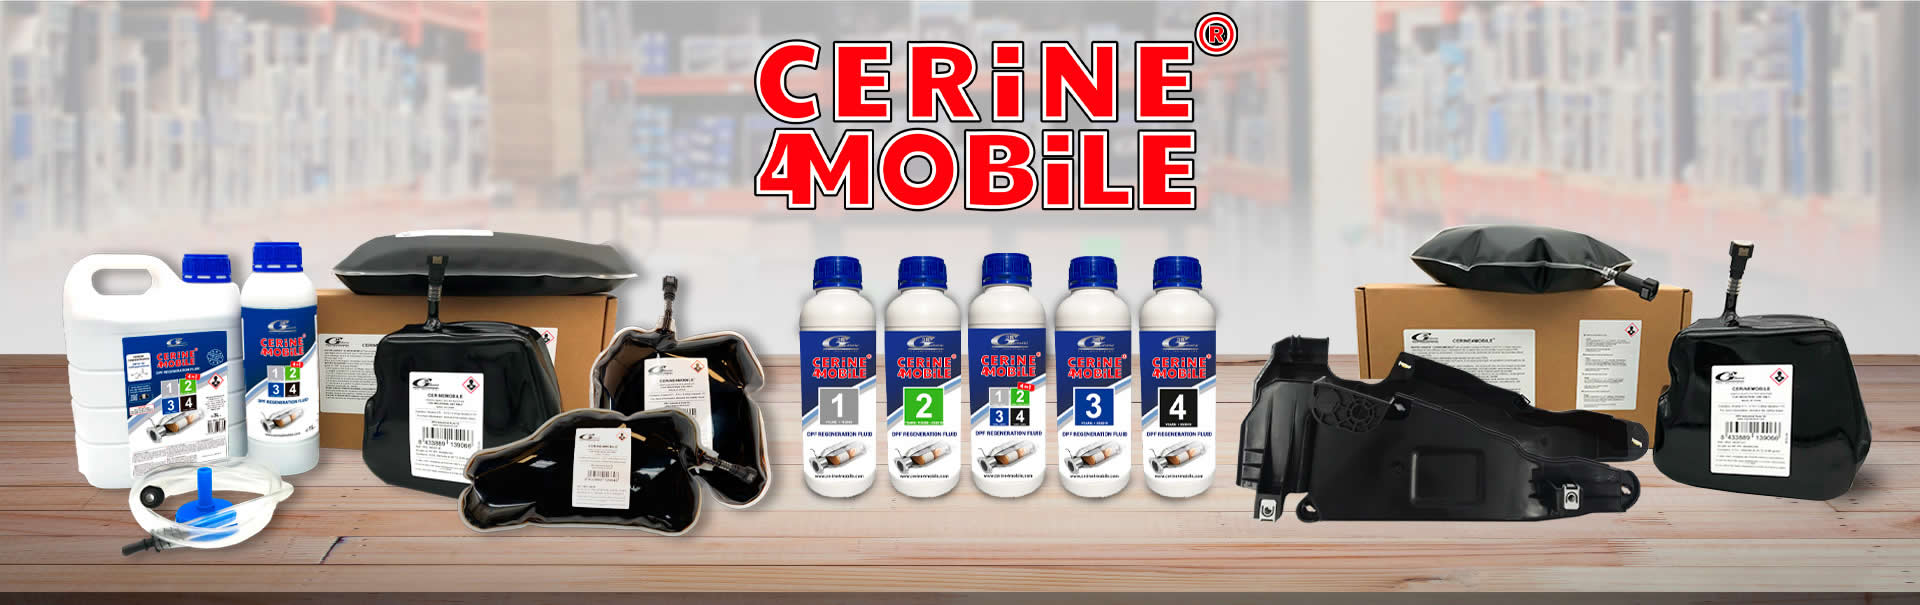 Cerine 4 mobile